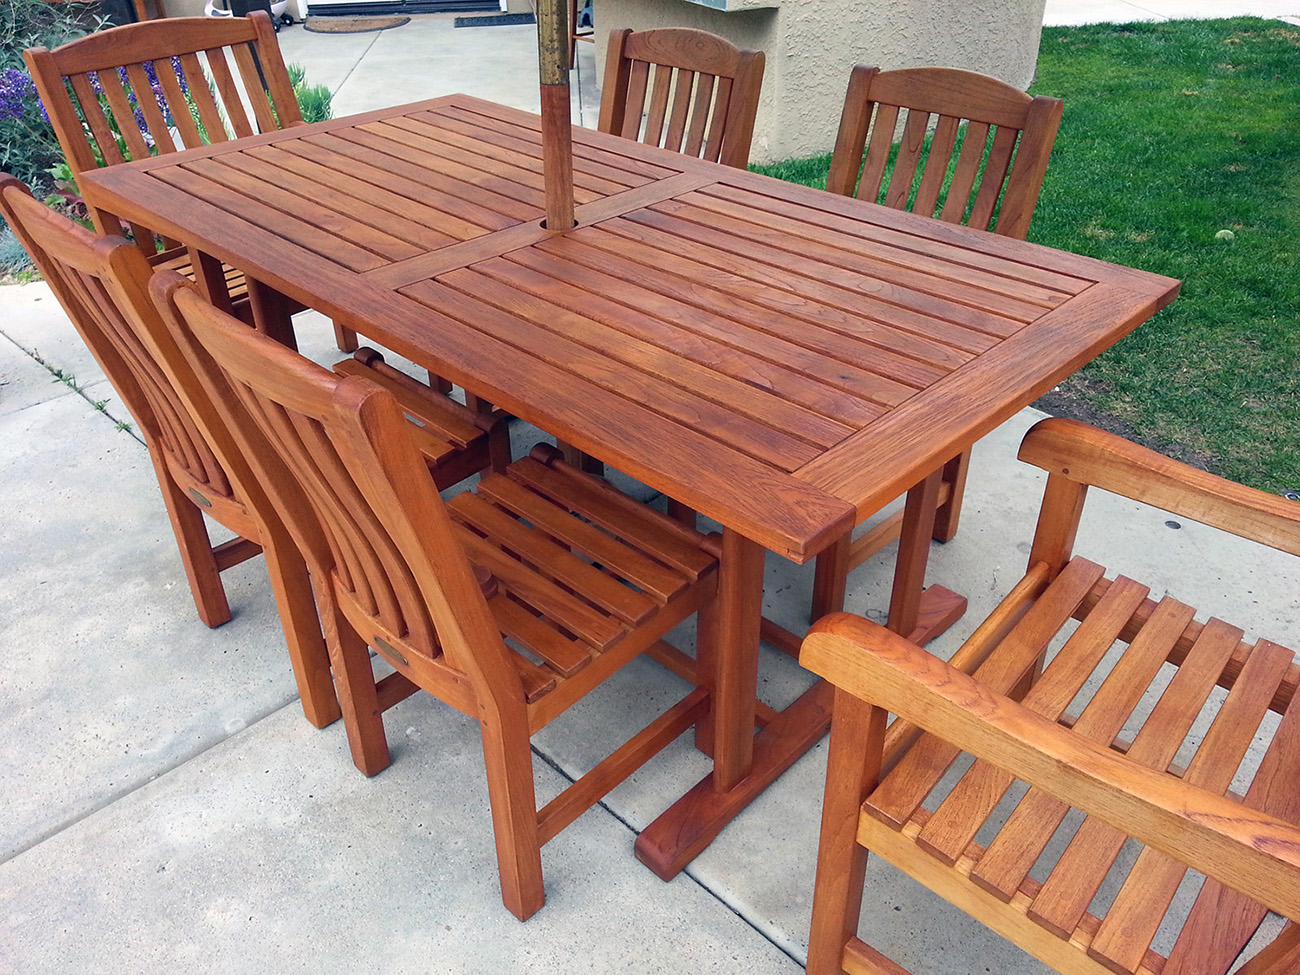 Refinished outdoor teak table set in Irvine | OC Teak